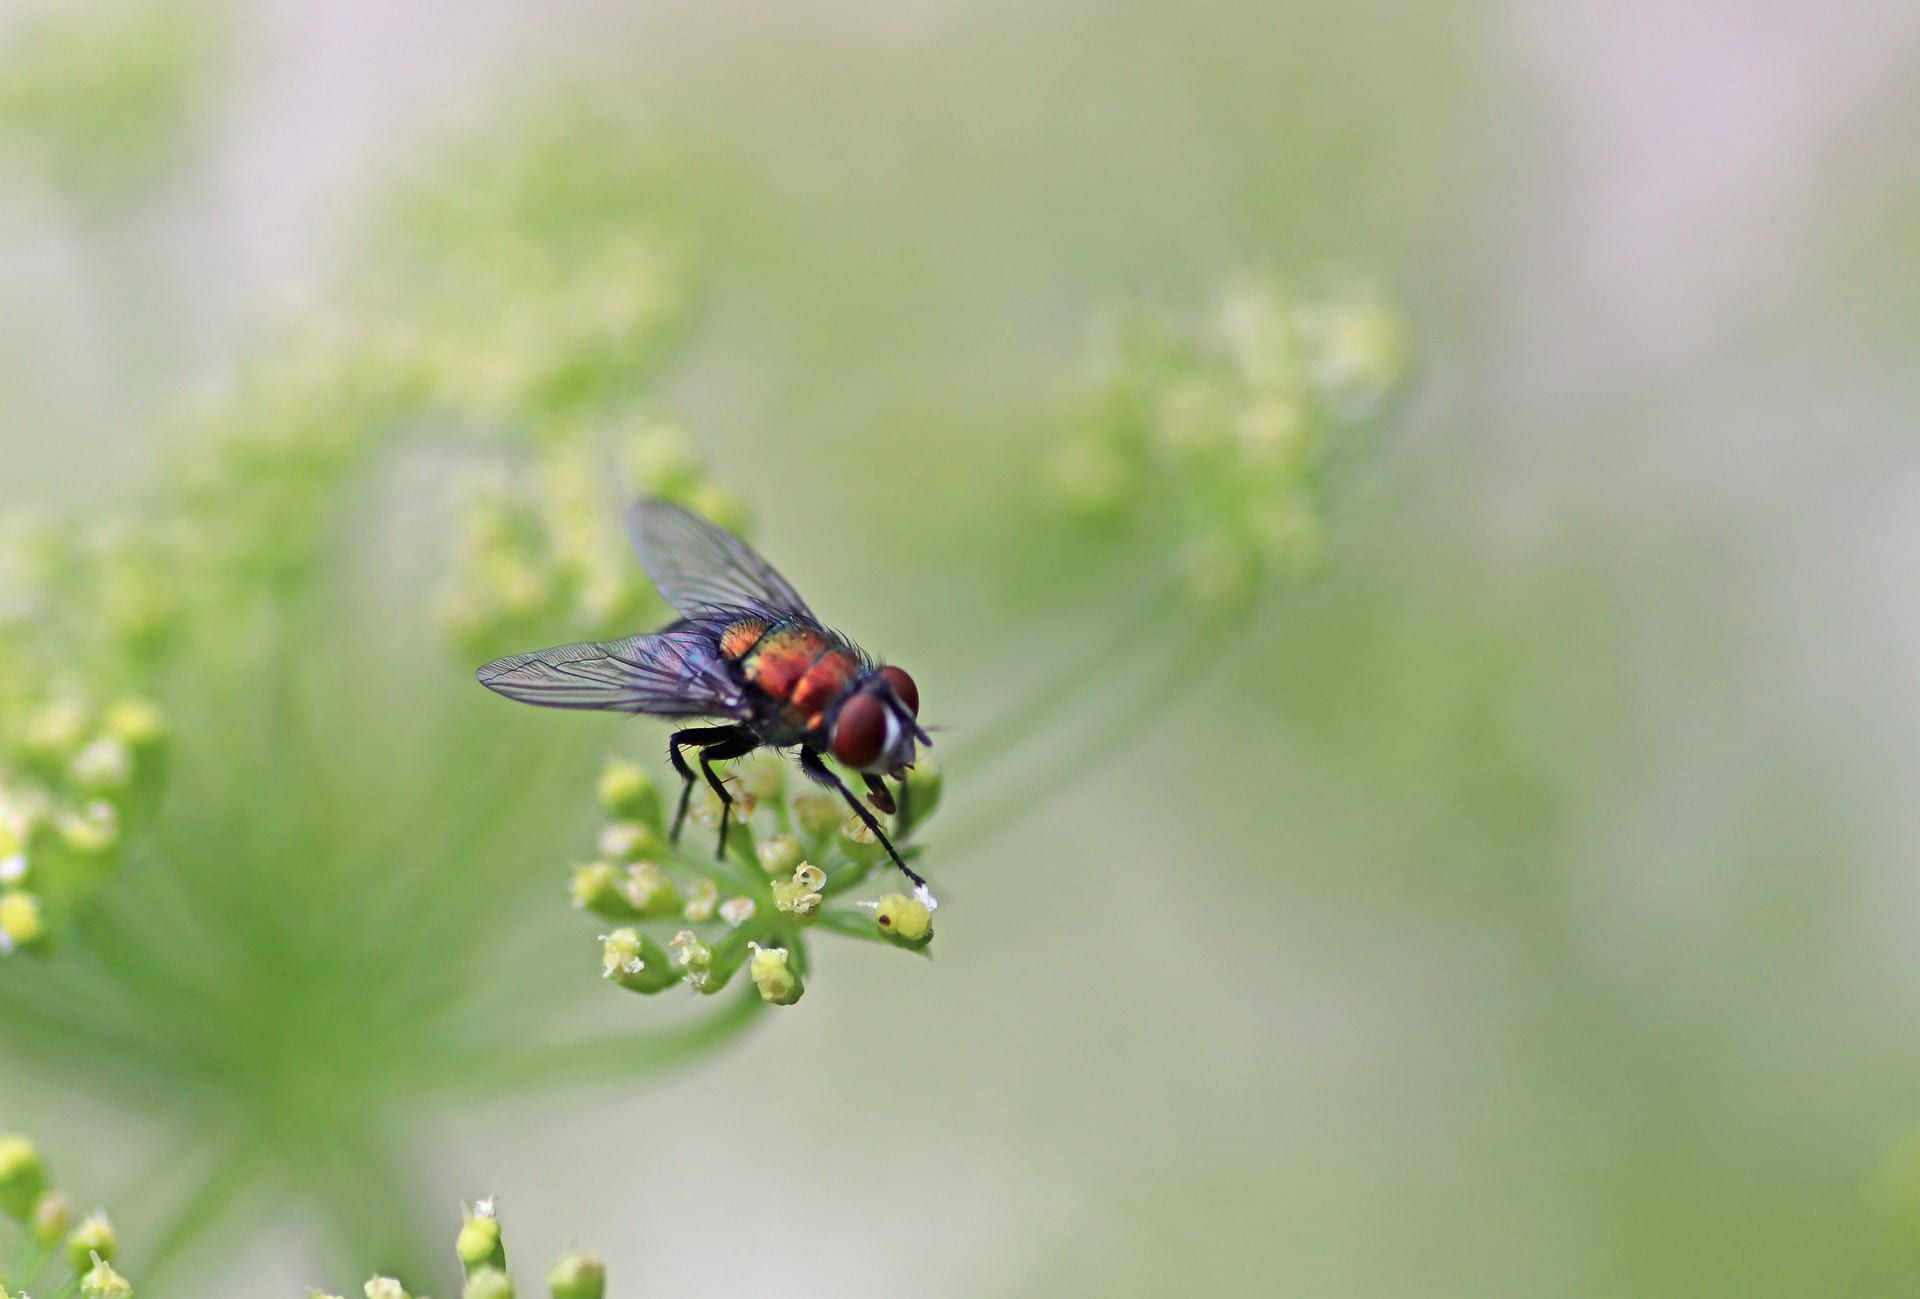 Blowfly on a plant.